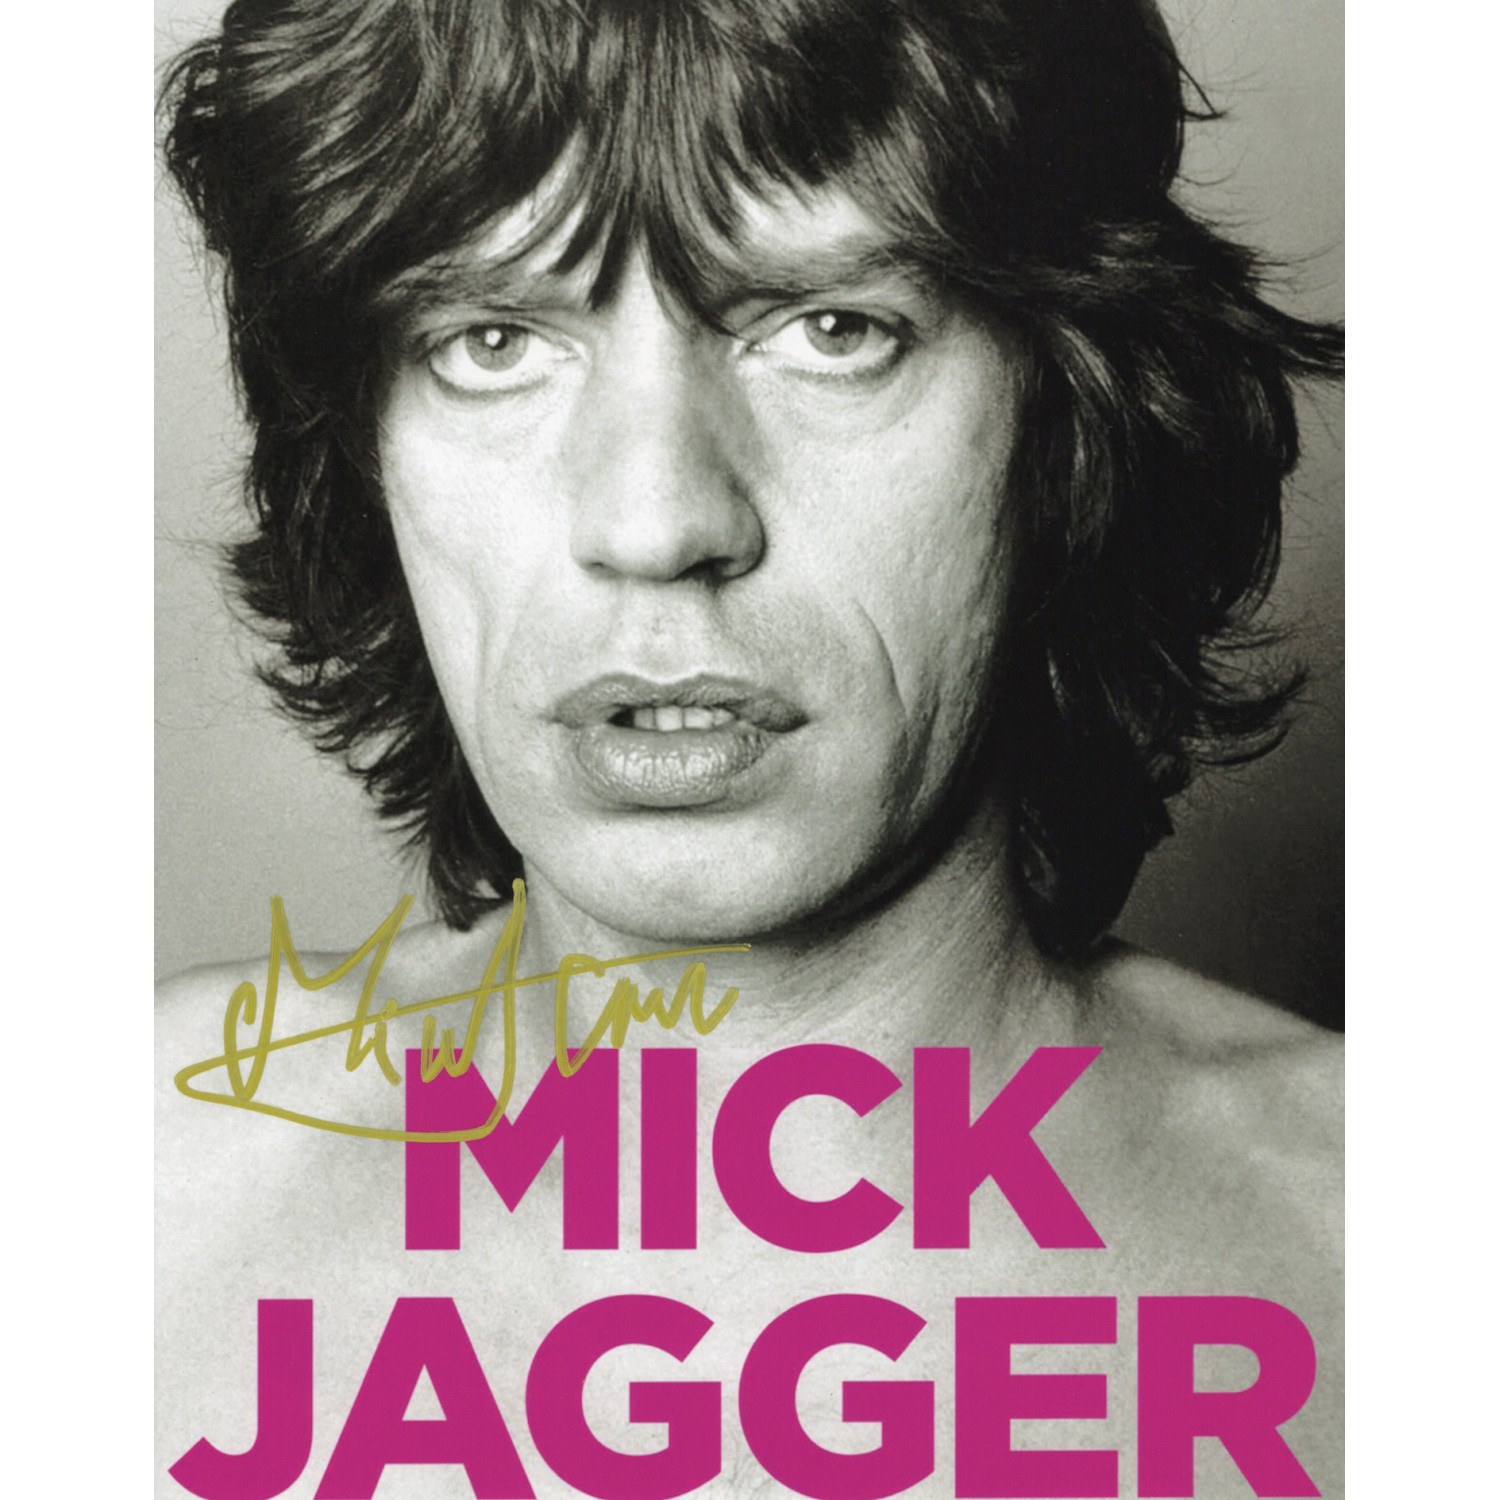 Mick Jagger ミック・ジャガー The Rolling Stones ローリング